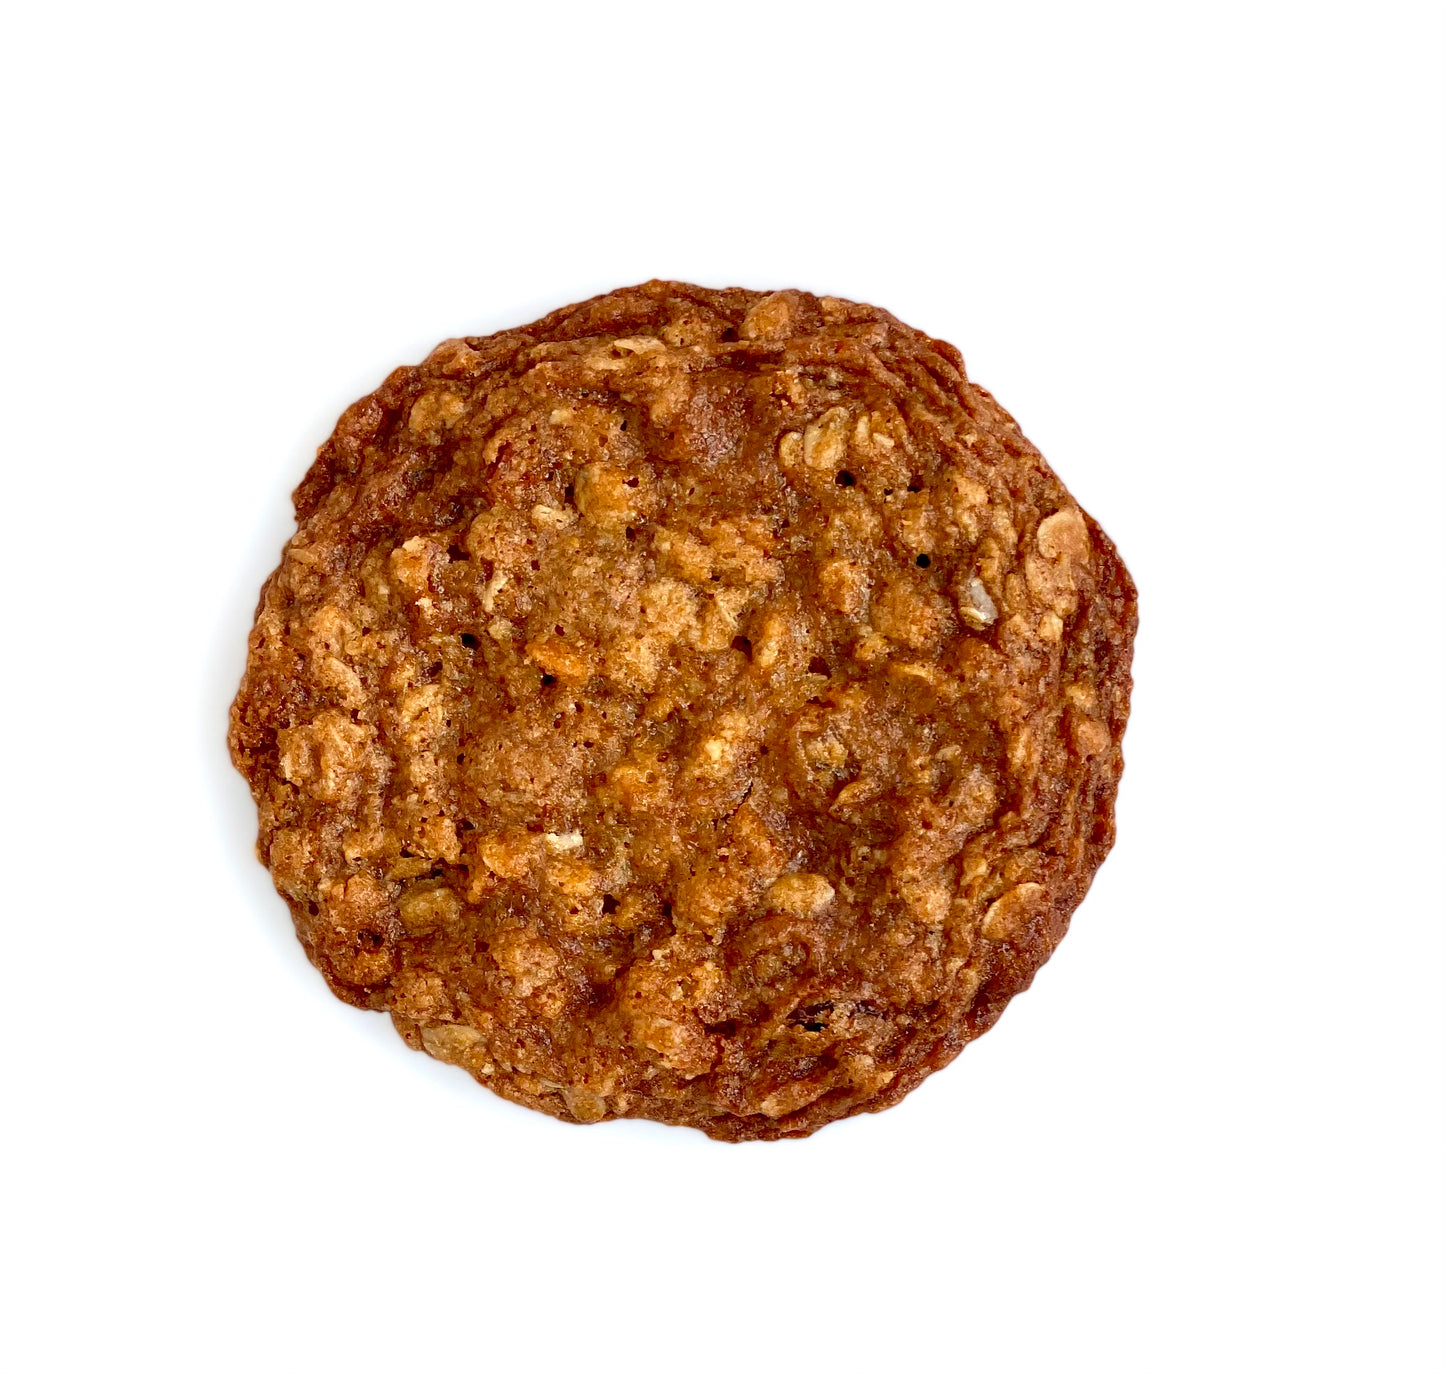 Oatmeal-Raisin Cookie